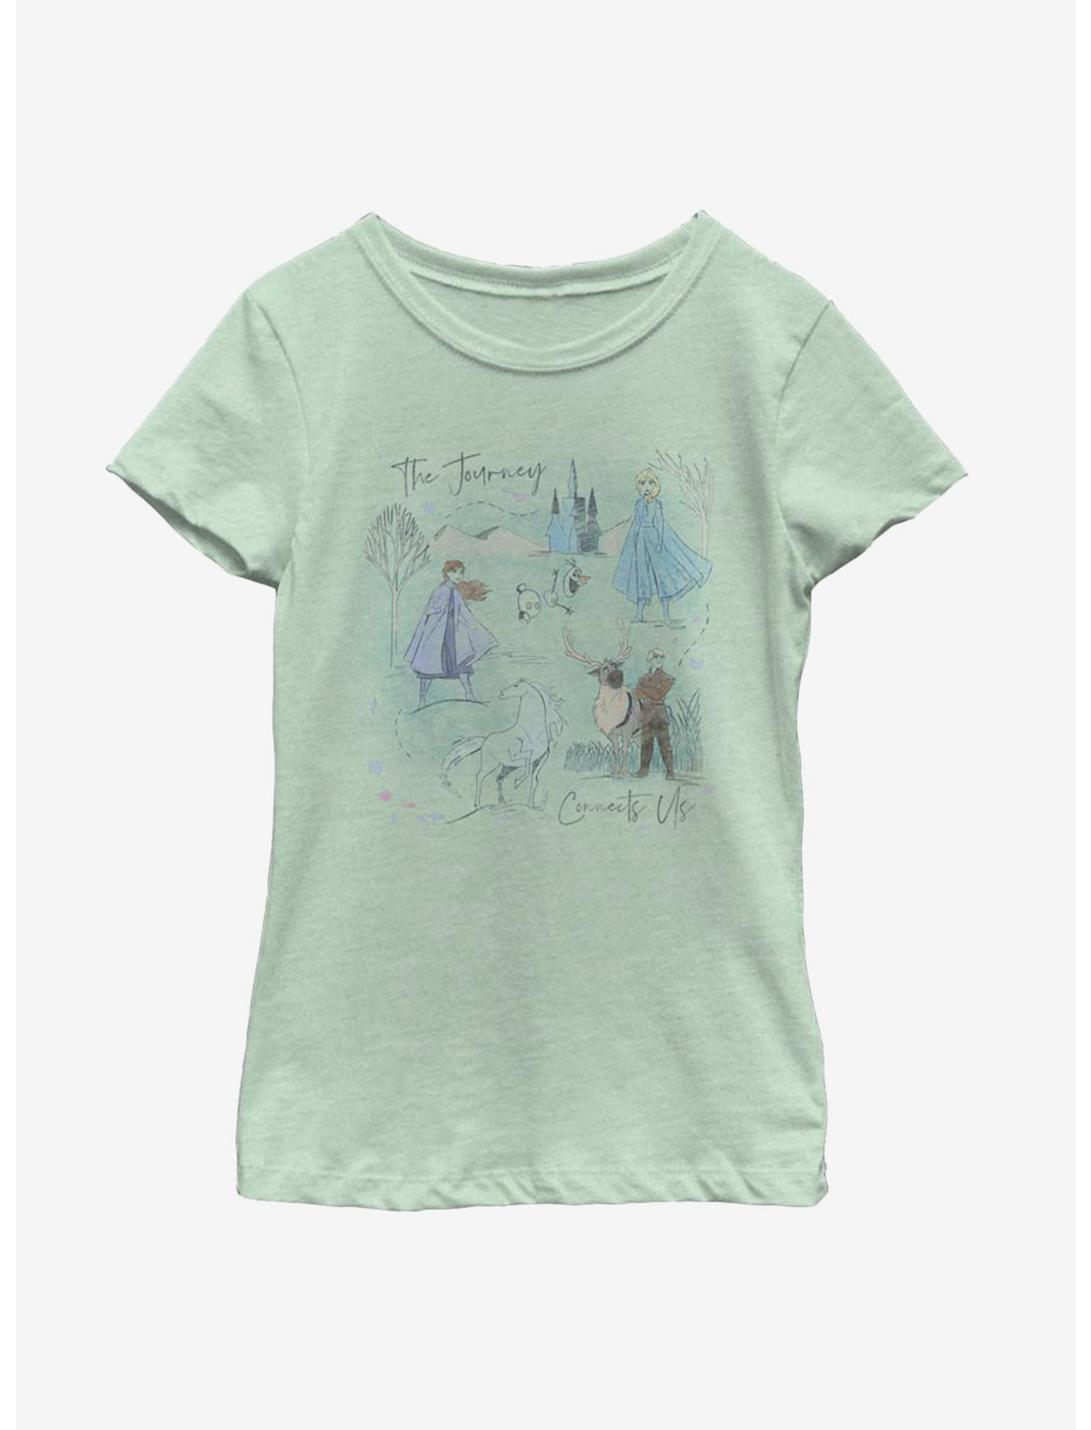 Disney Frozen 2 Arendelle Journey Youth Girls T-Shirt, MINT, hi-res